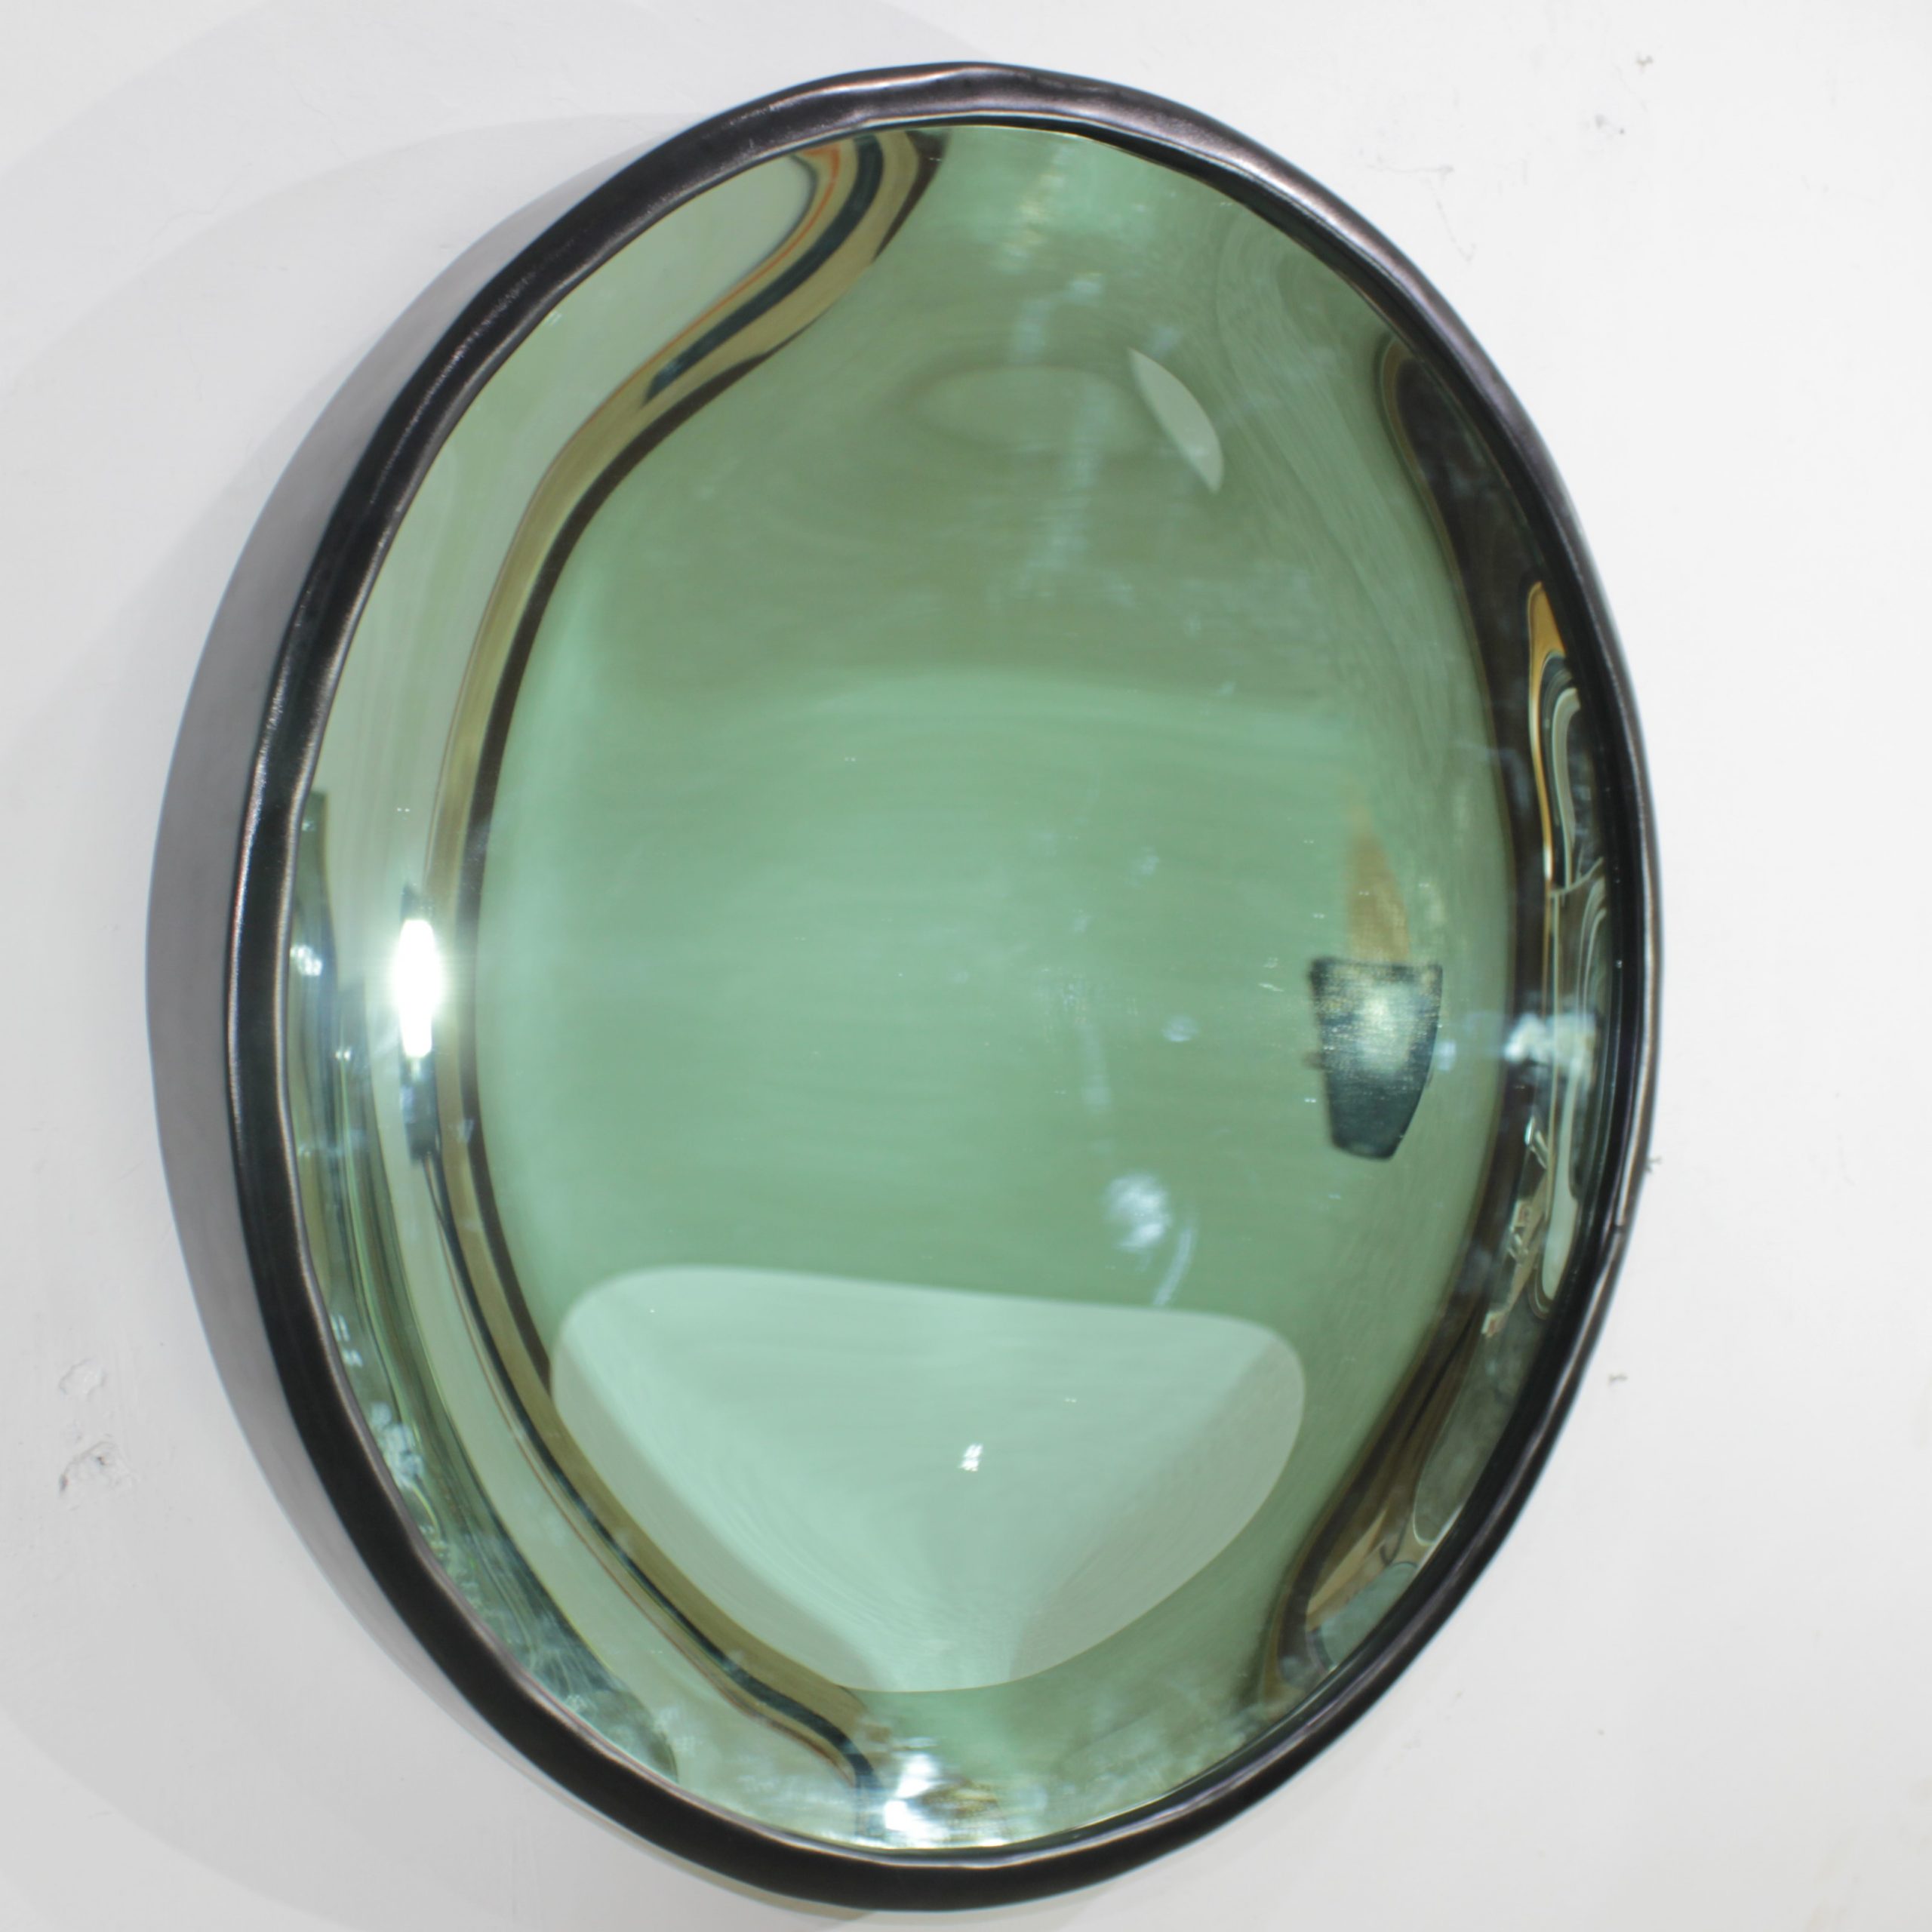 Antique Oval Convex Mirror